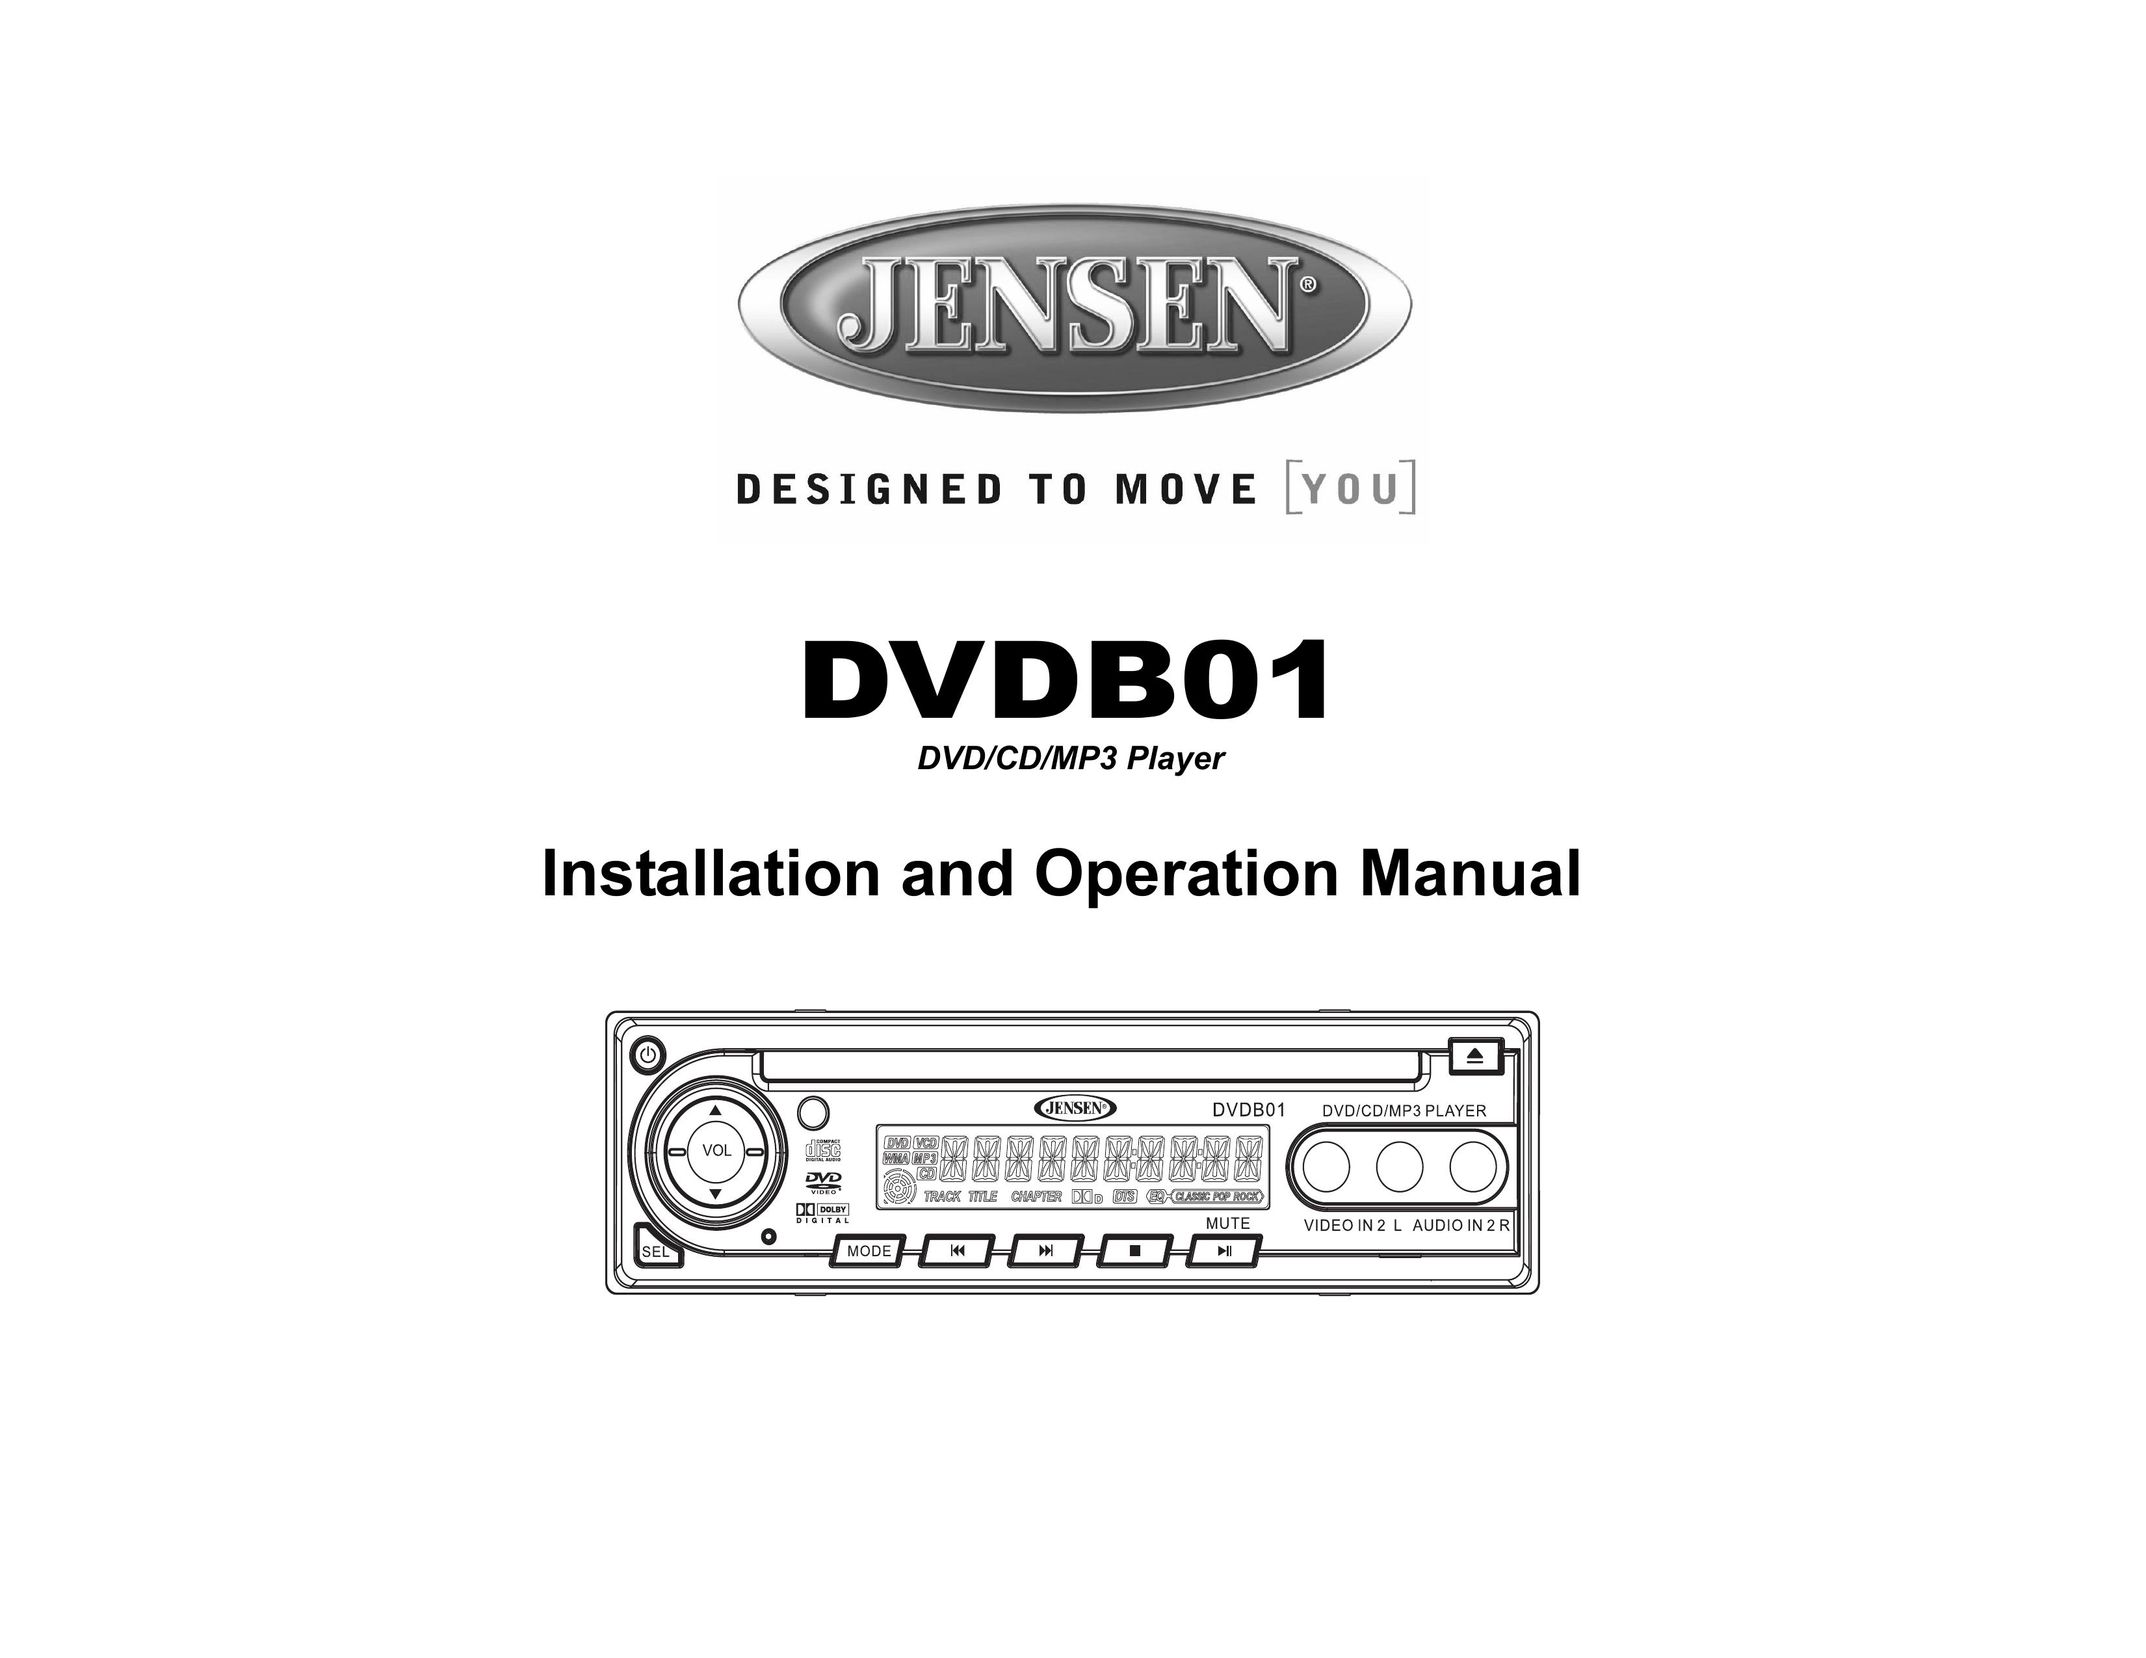 Jensen DVDB01 DVD Player User Manual